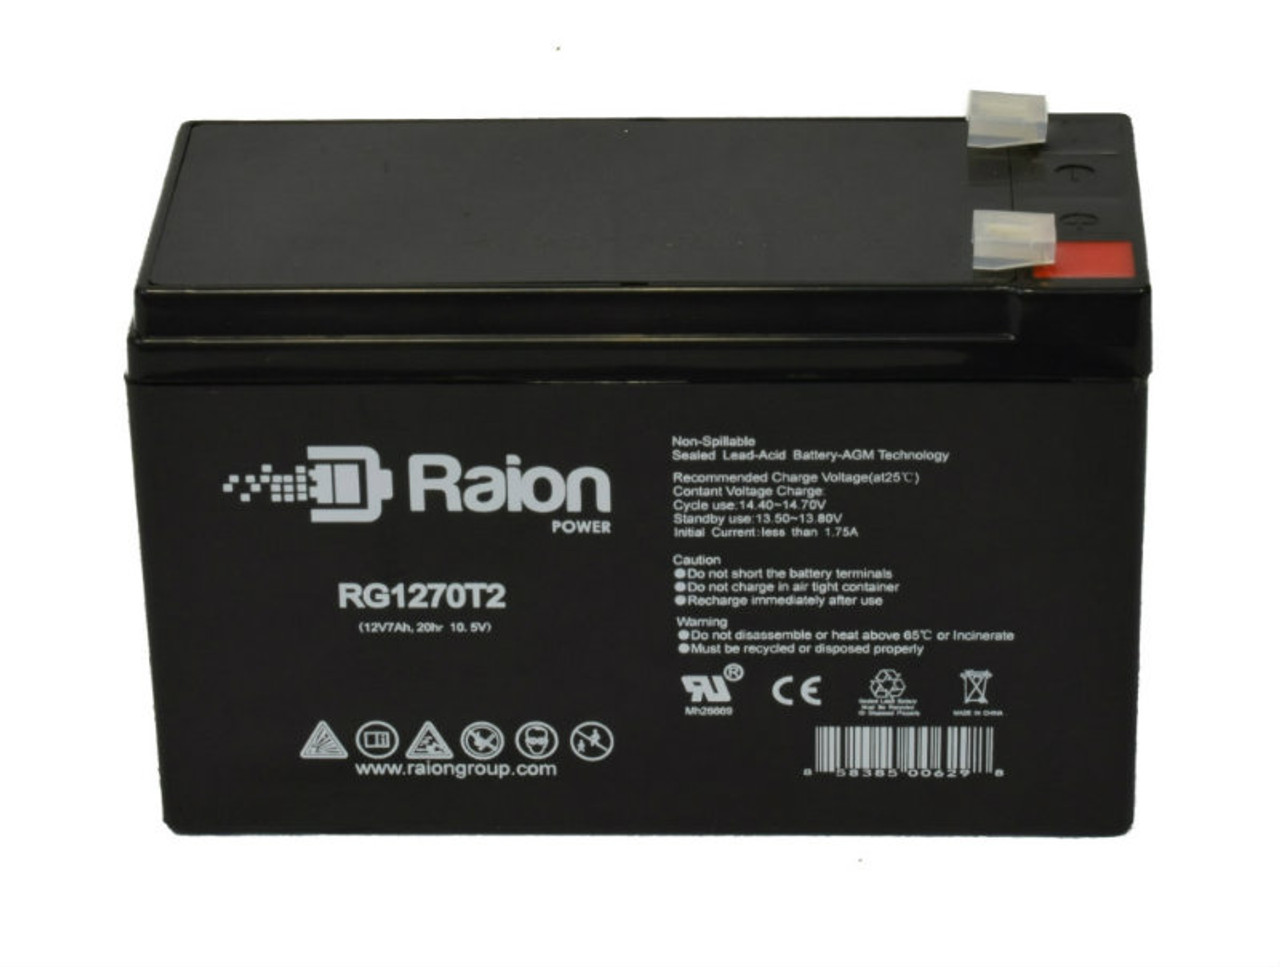 Raion Power RG1270T1 12V 7Ah Lead Acid Battery for Bruno Electra-Ride LT Stairlift SRE-2750